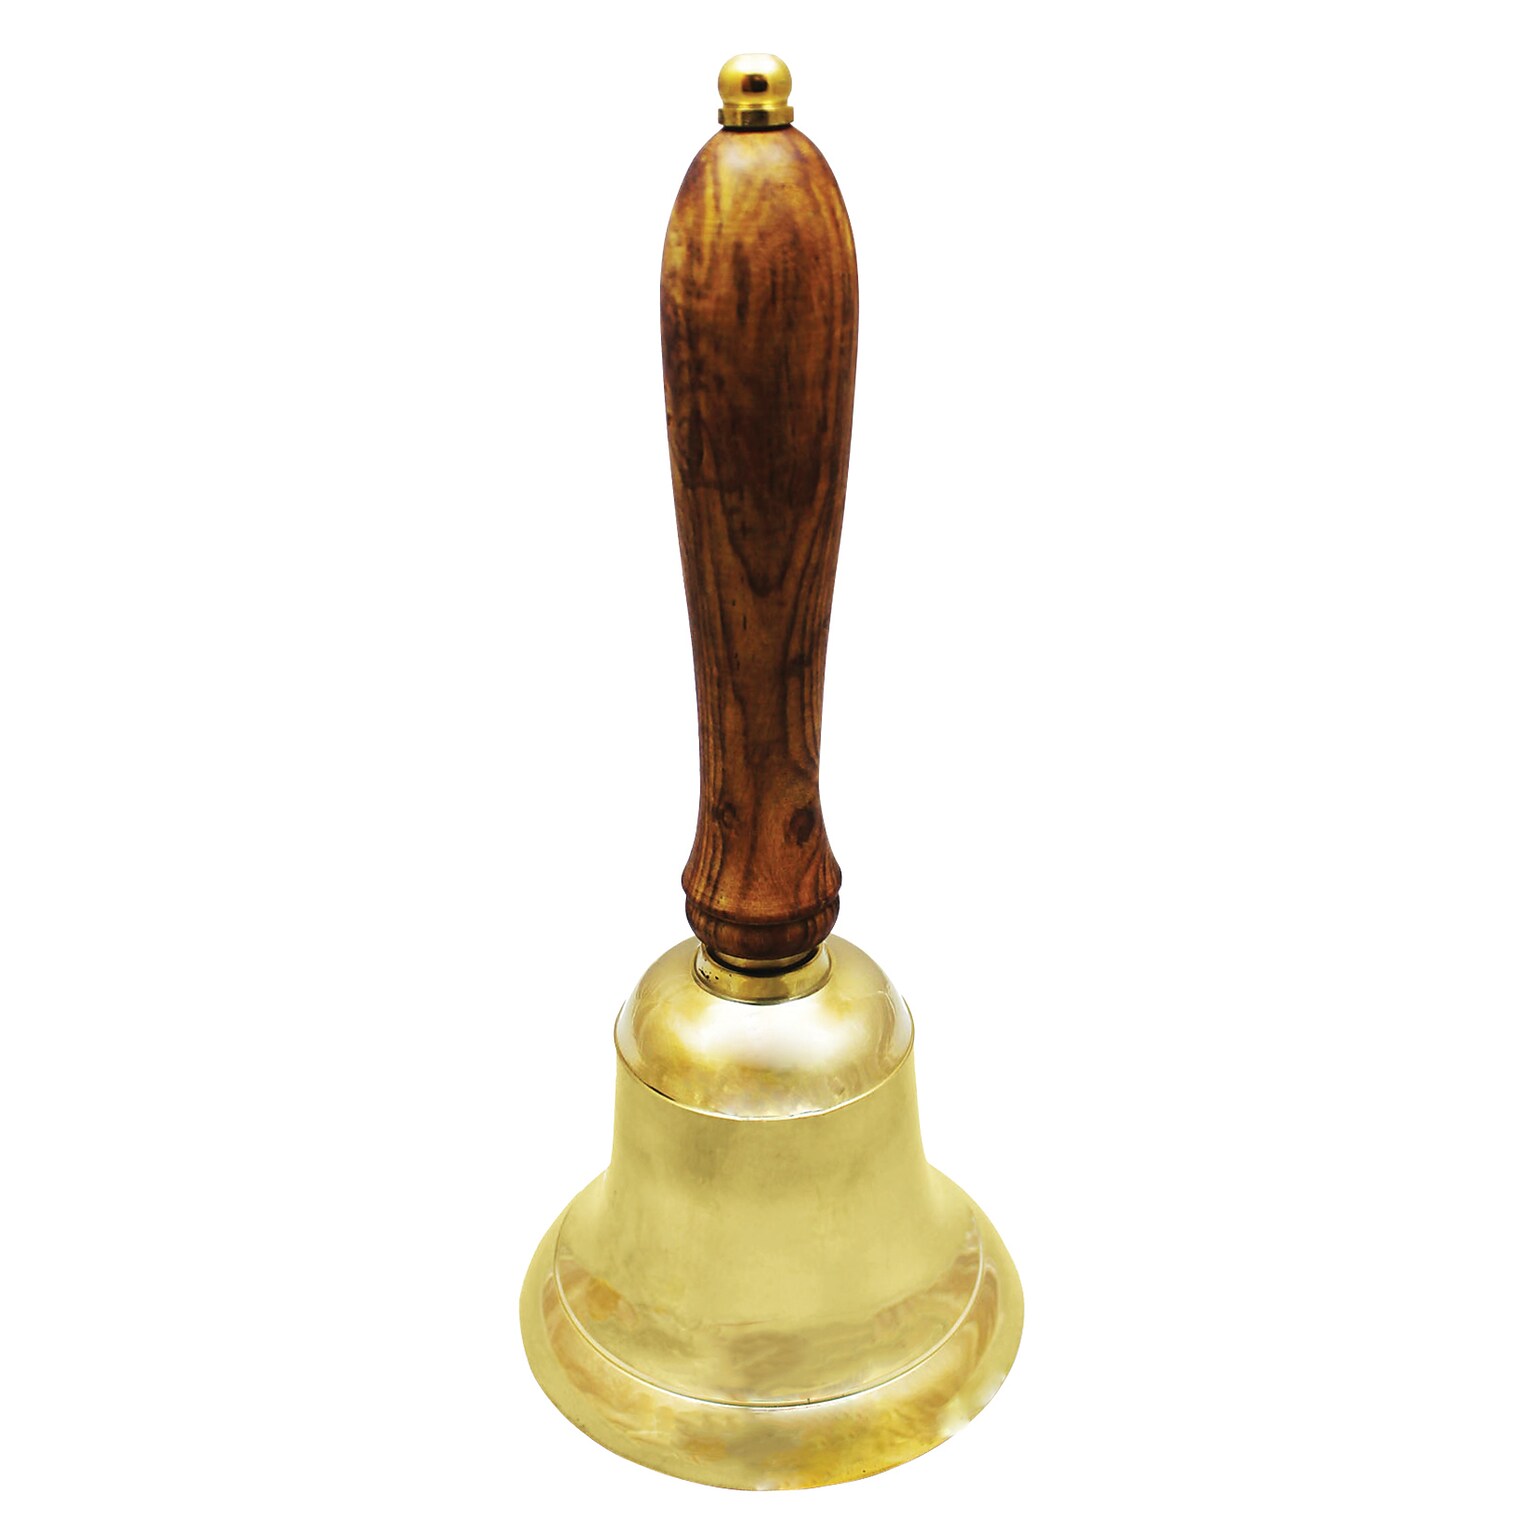 Affluence Unlimited School Hand Bell, Polished Brass (AU-01107)